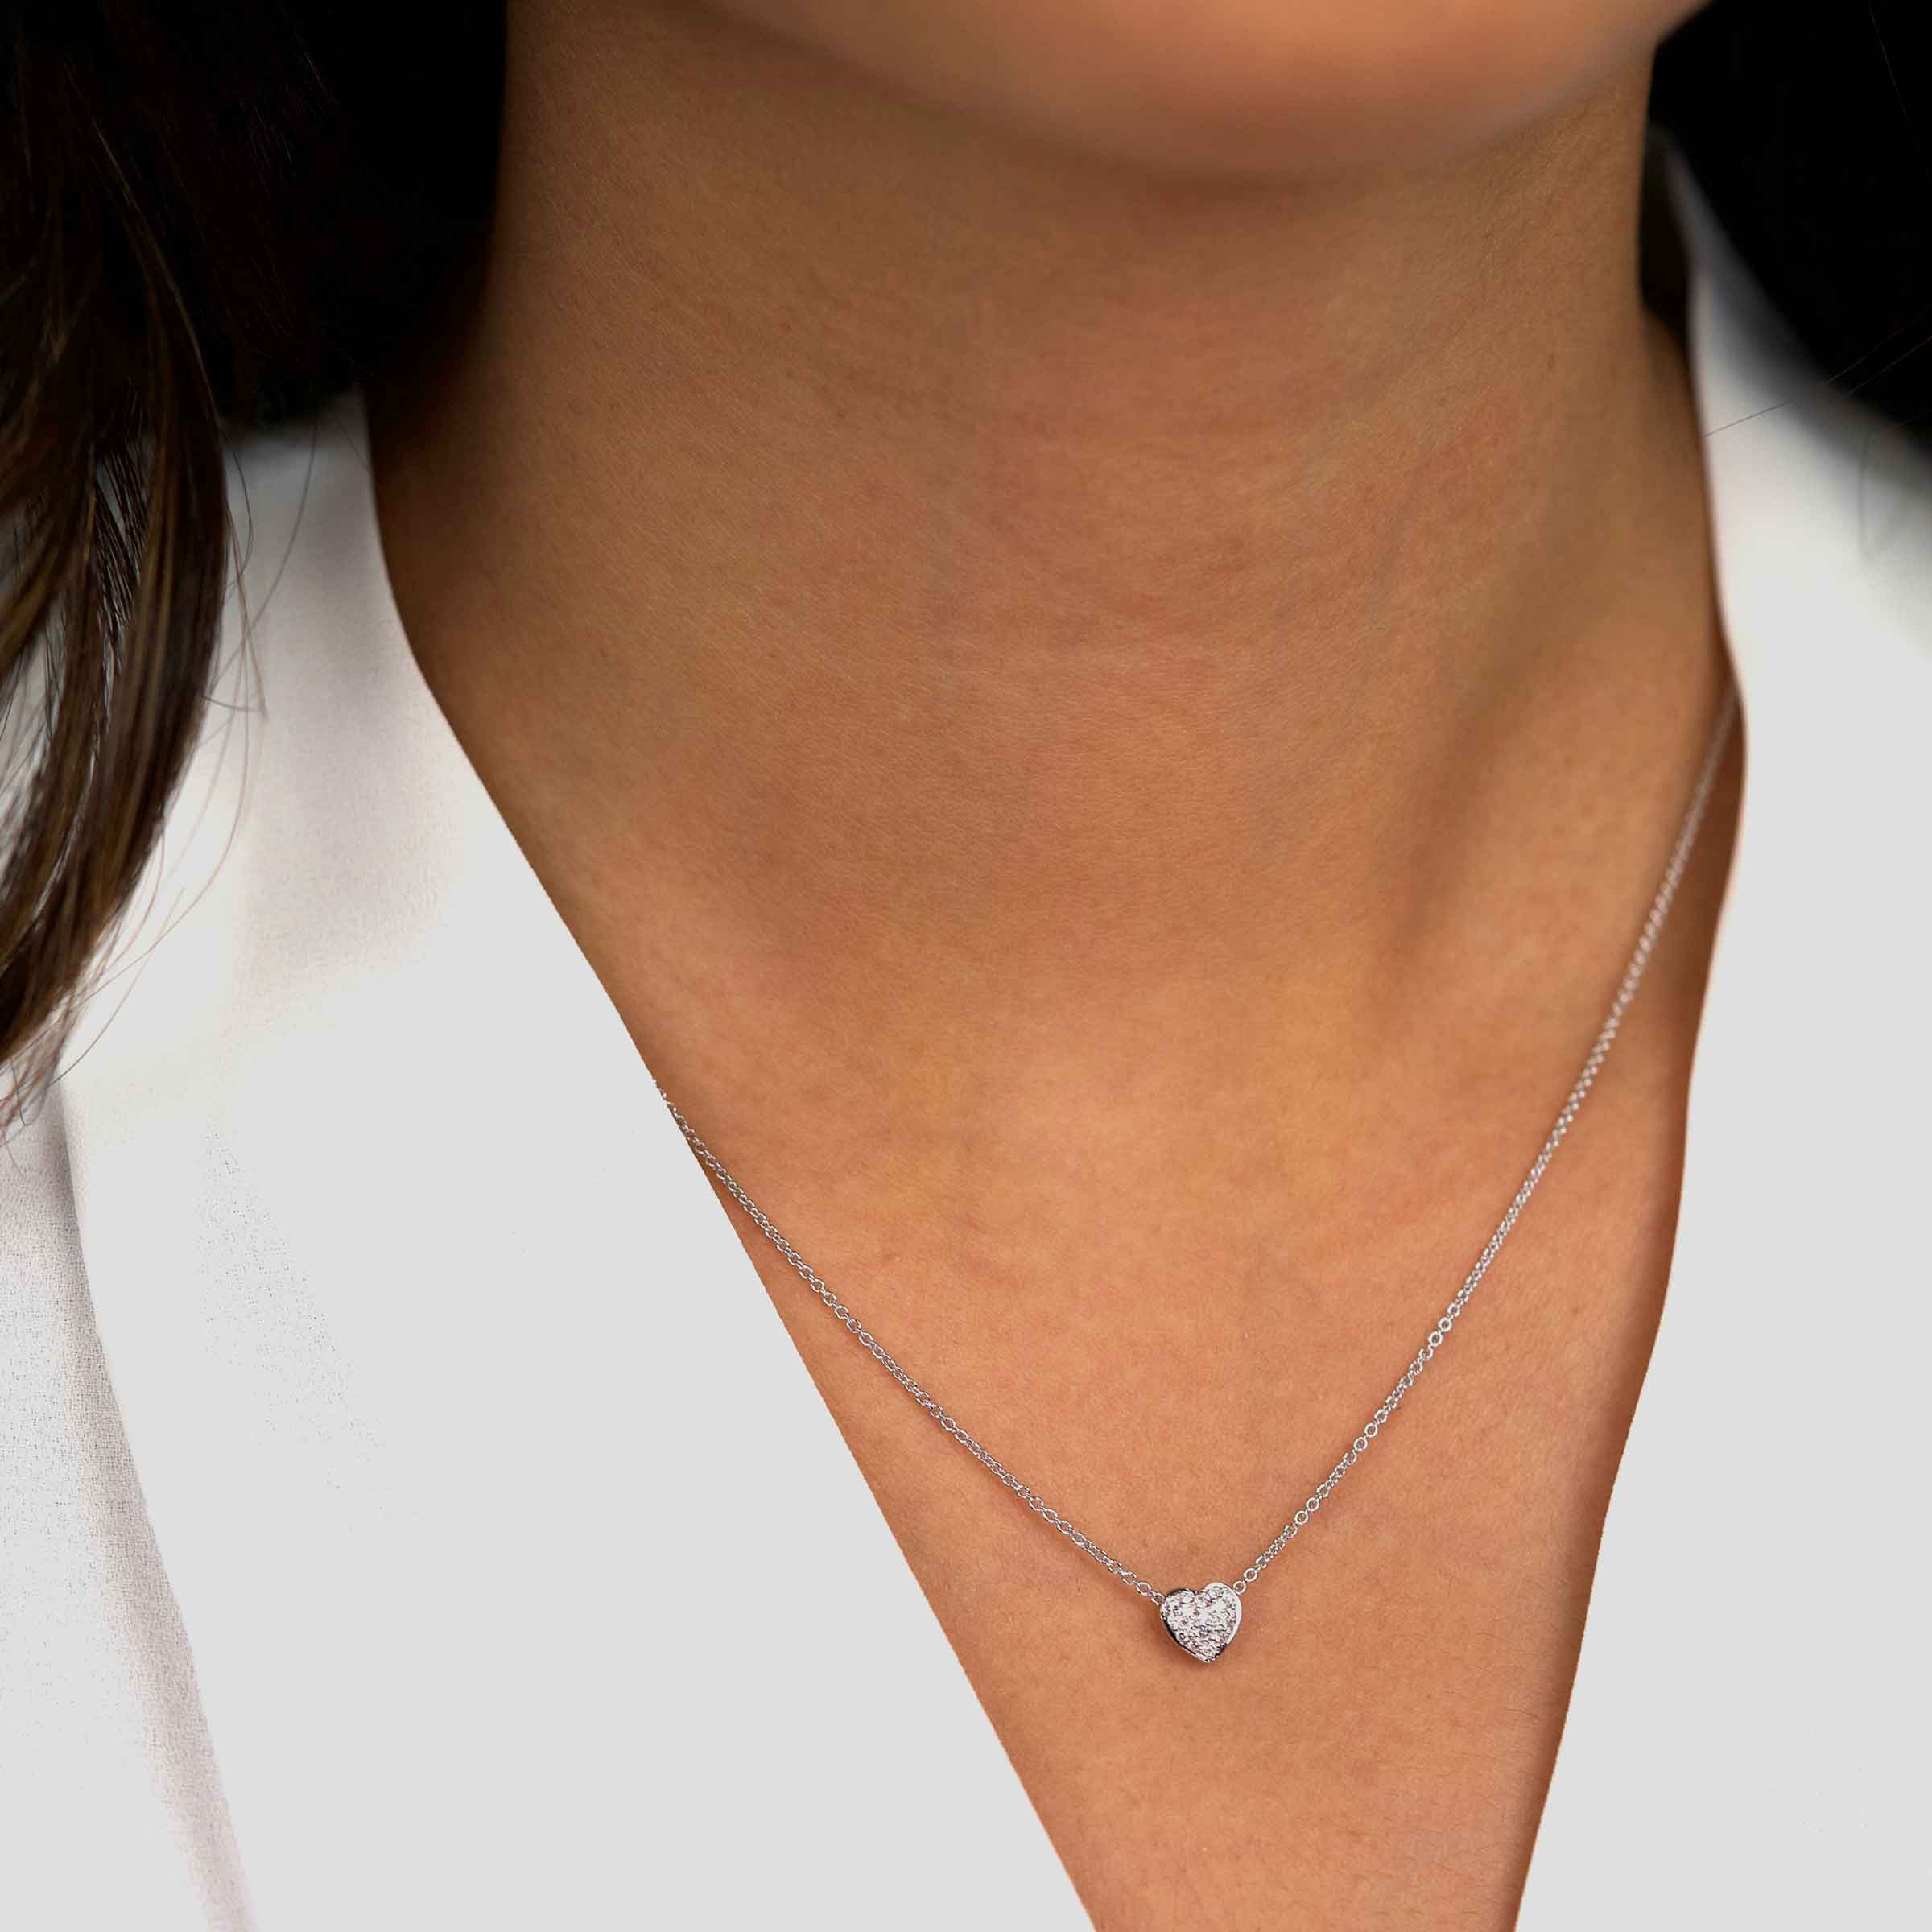 Heart Shape Brass & Cubic Zirconia Necklaces 18K White GP Purple Crystal CZ Heart  Pendant Necklace at Rs 104/piece | क्यूबिक जिरकोनिया नेकलेस in Gurgaon |  ID: 24174890073